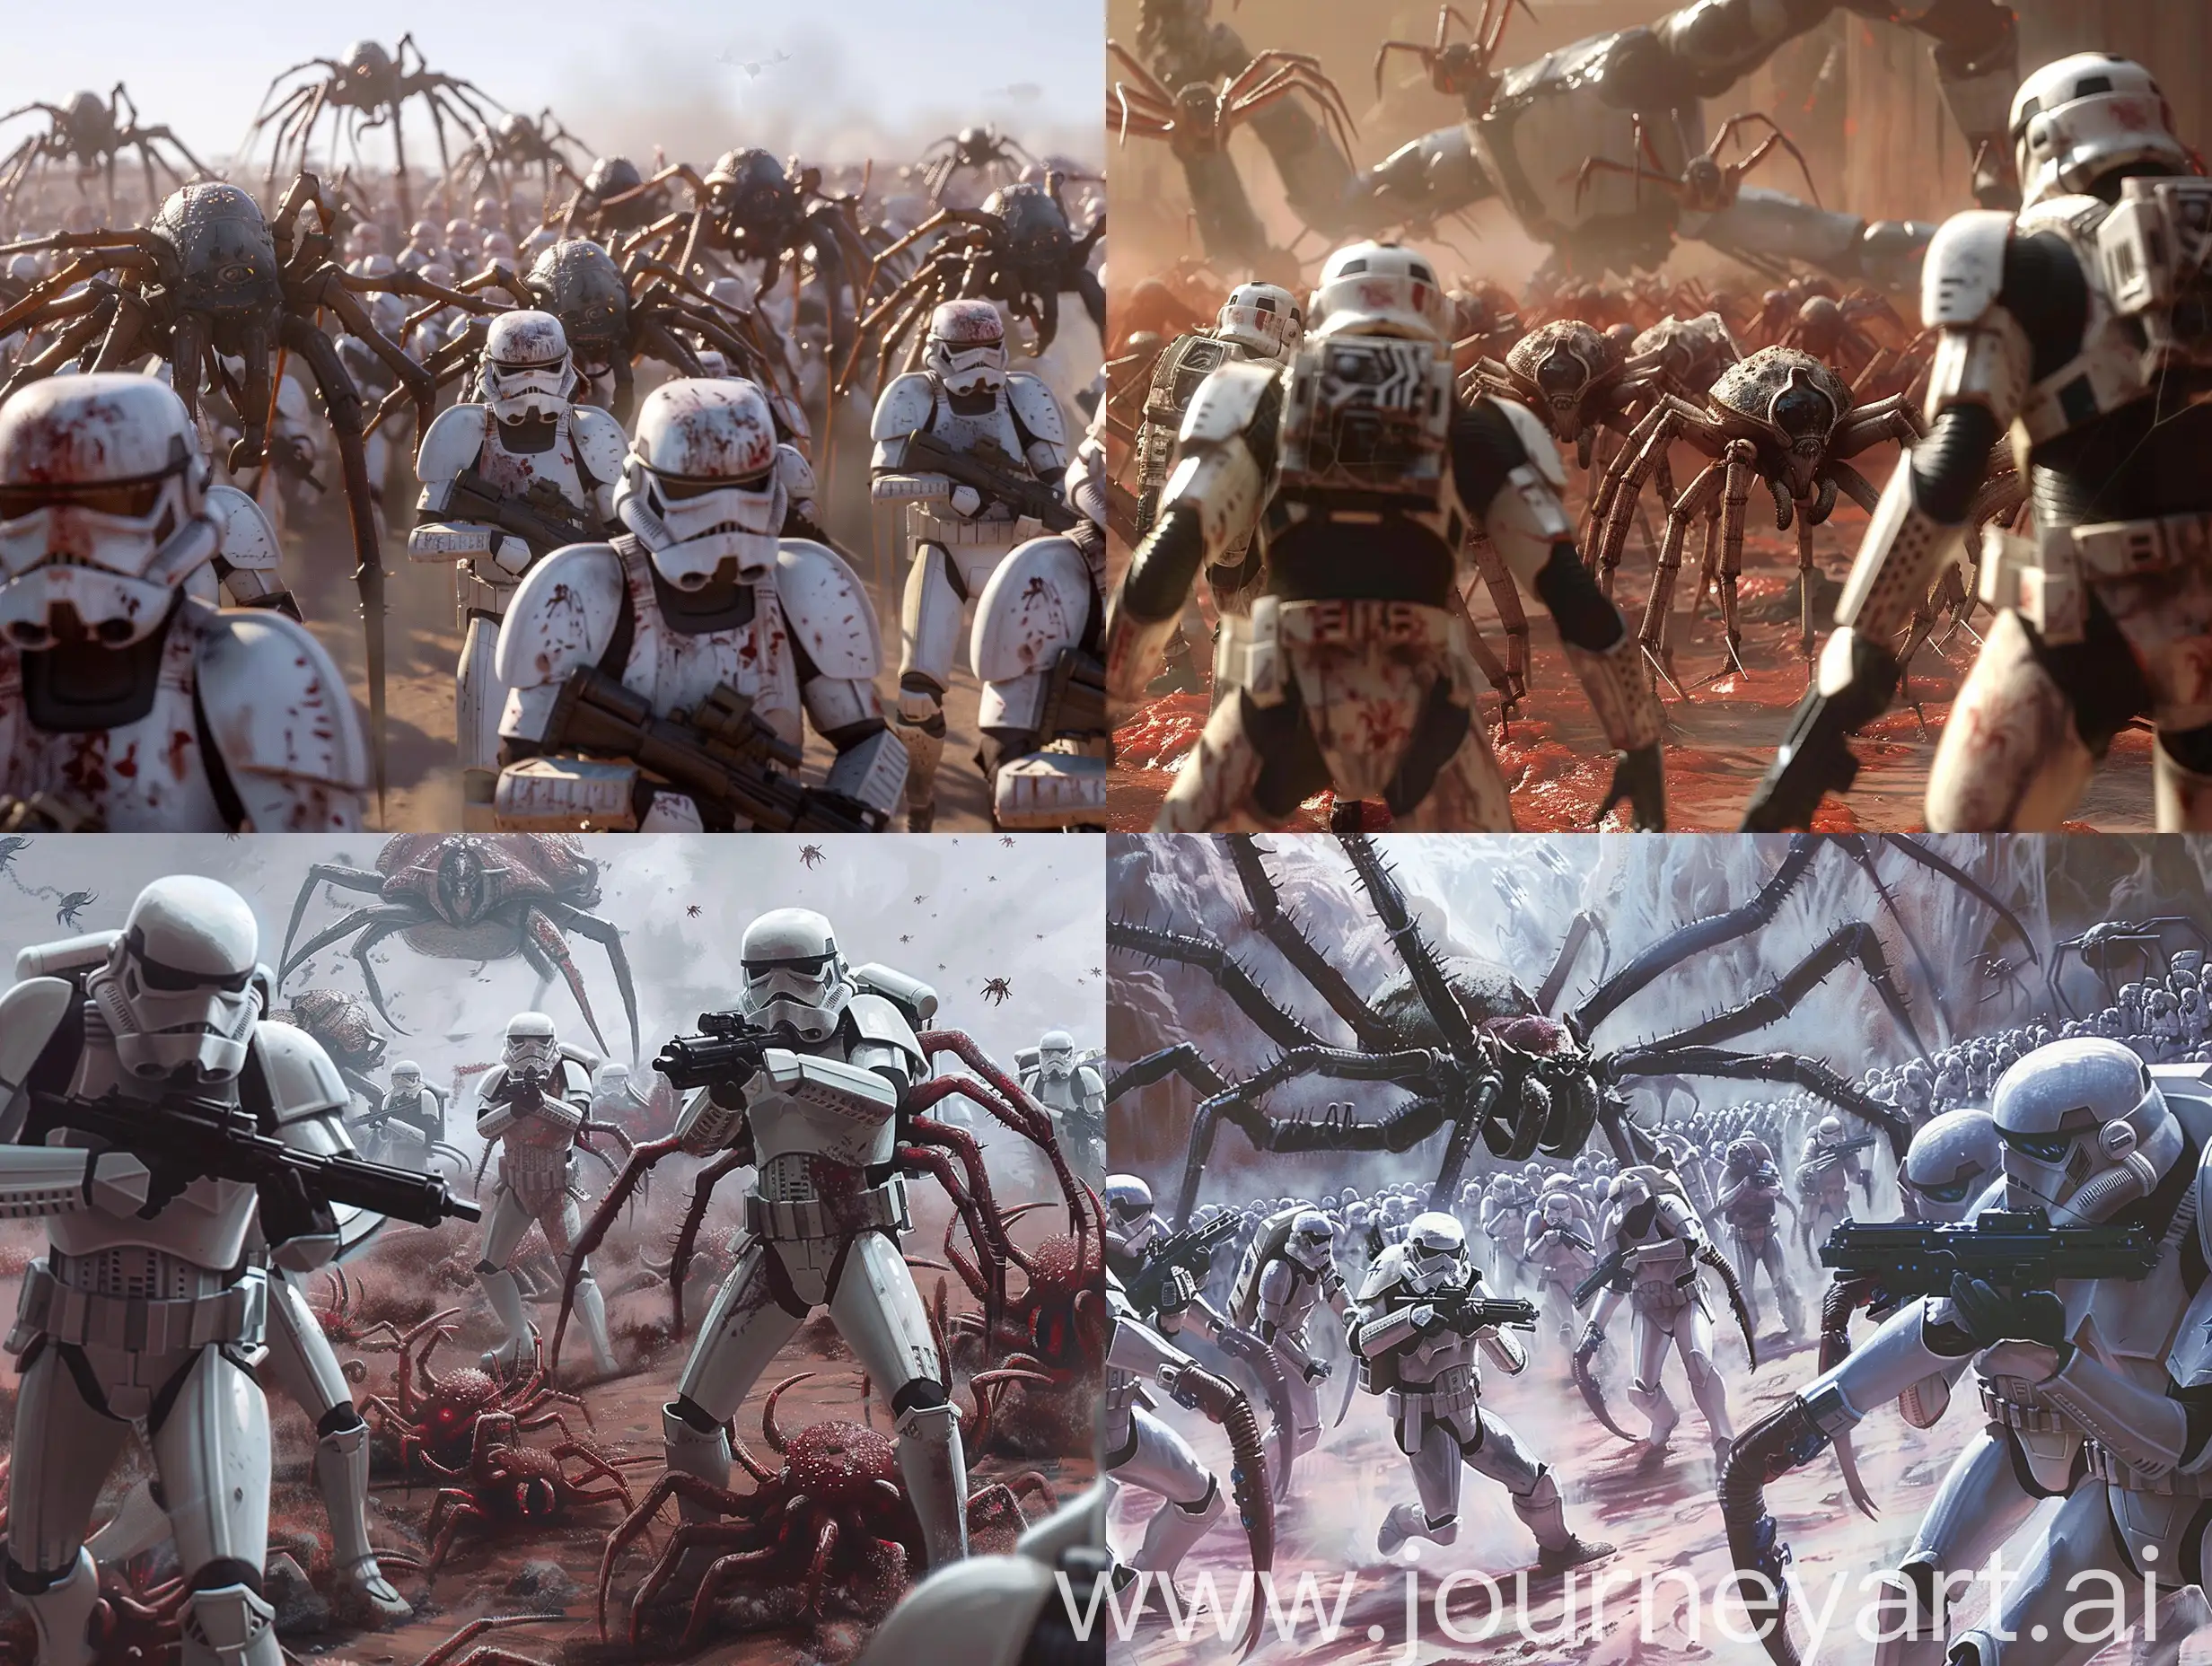 crowd of arachnoids against star troopers, battlefield,